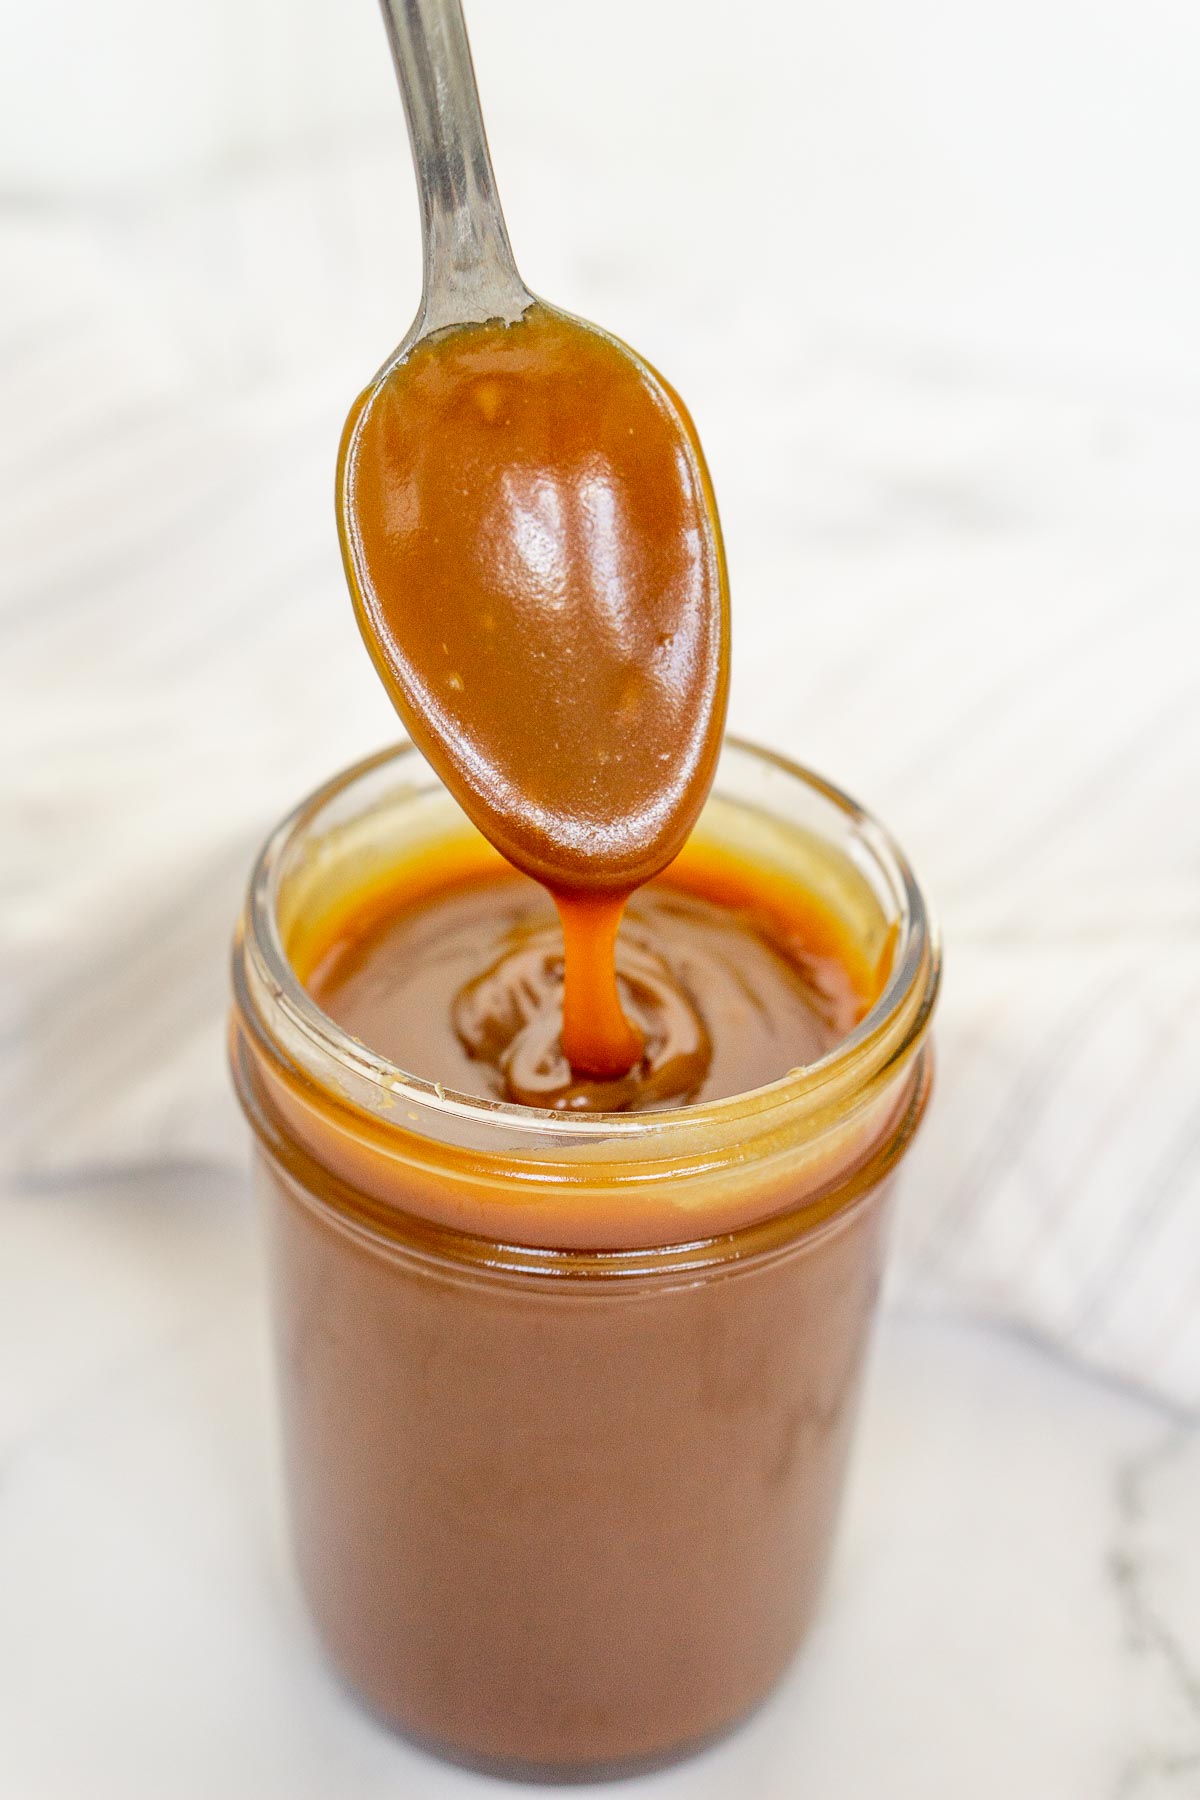 Spoon drizzling bourbon caramel sauce into a jar